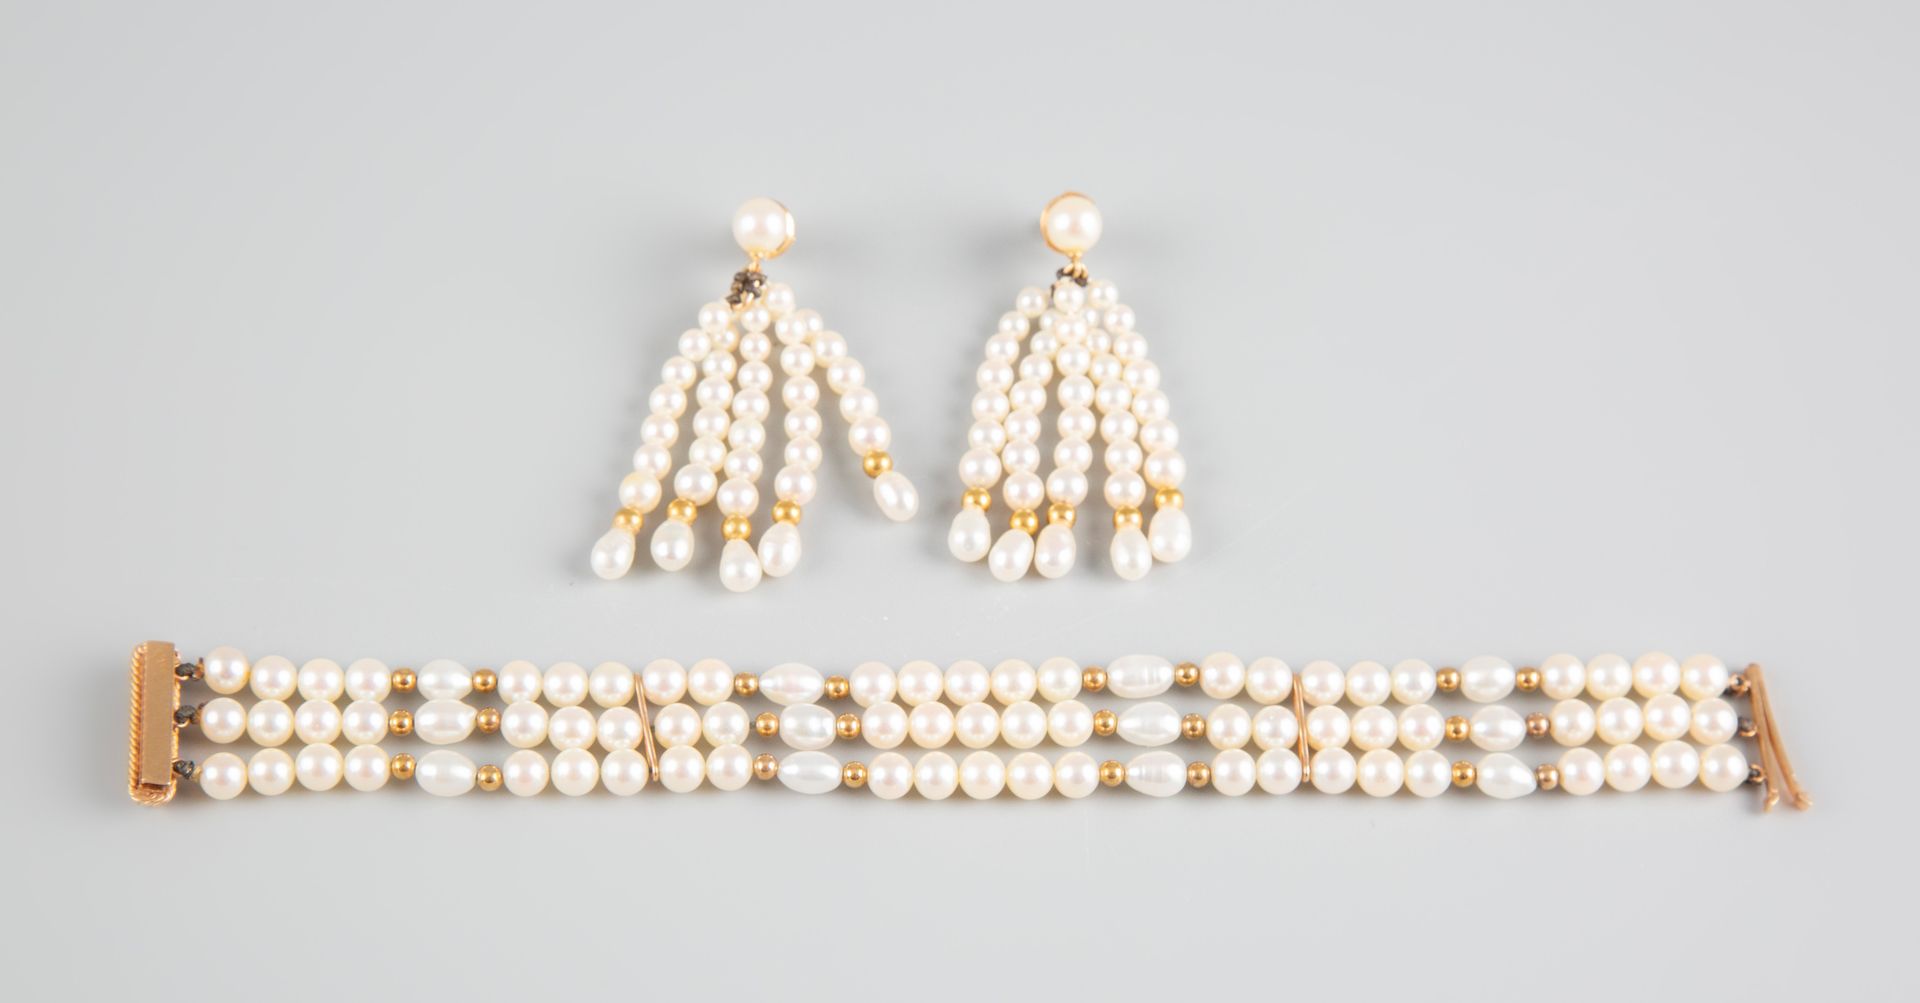 Null 套装包括一个三排Keishi珍珠手镯和一对配套的耳环。镶嵌于18K黄金750°。